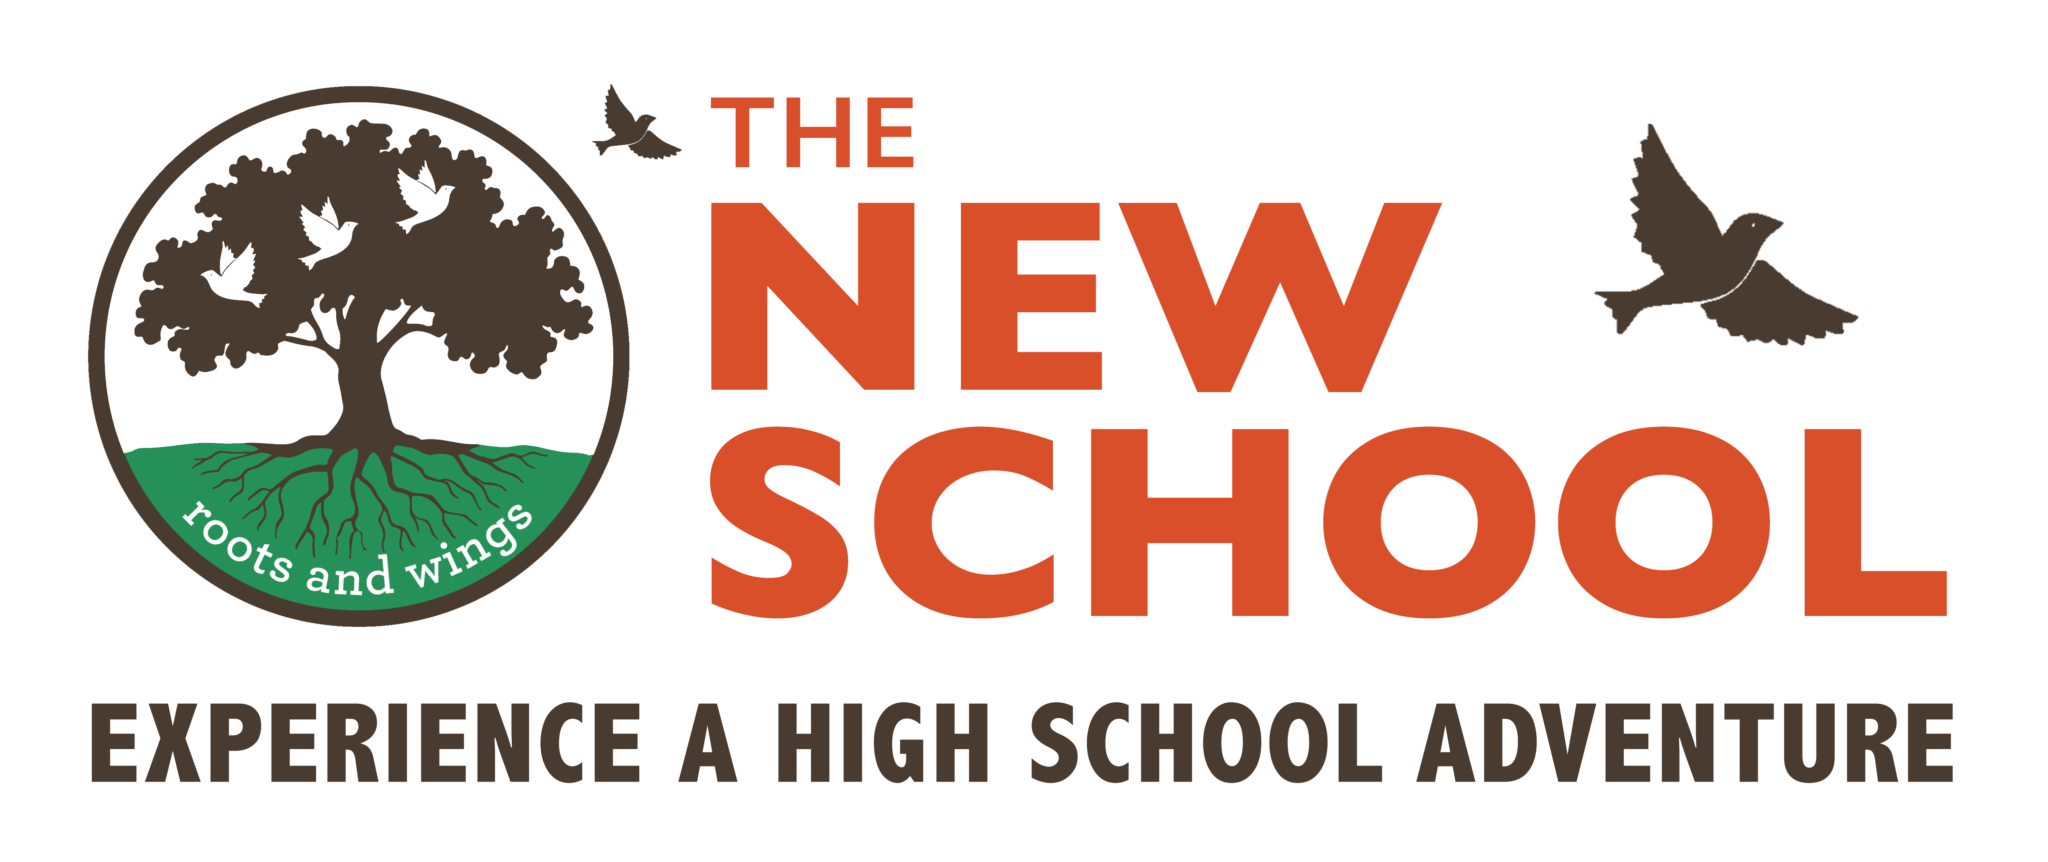 Tall Logo Experience a High School Adventure - The New School